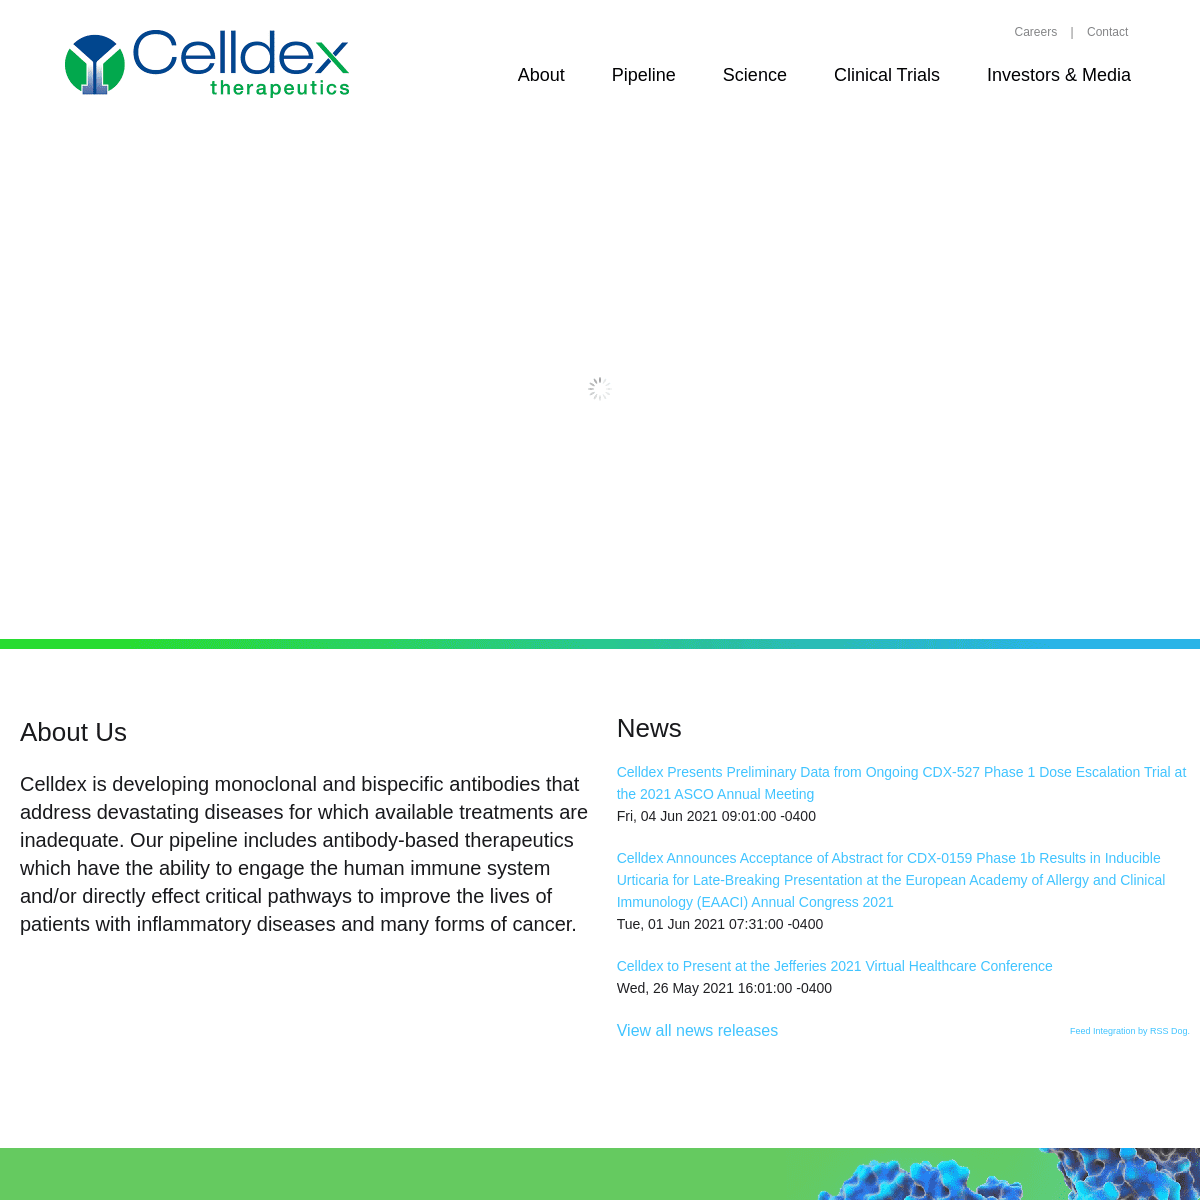 A complete backup of https://celldex.com